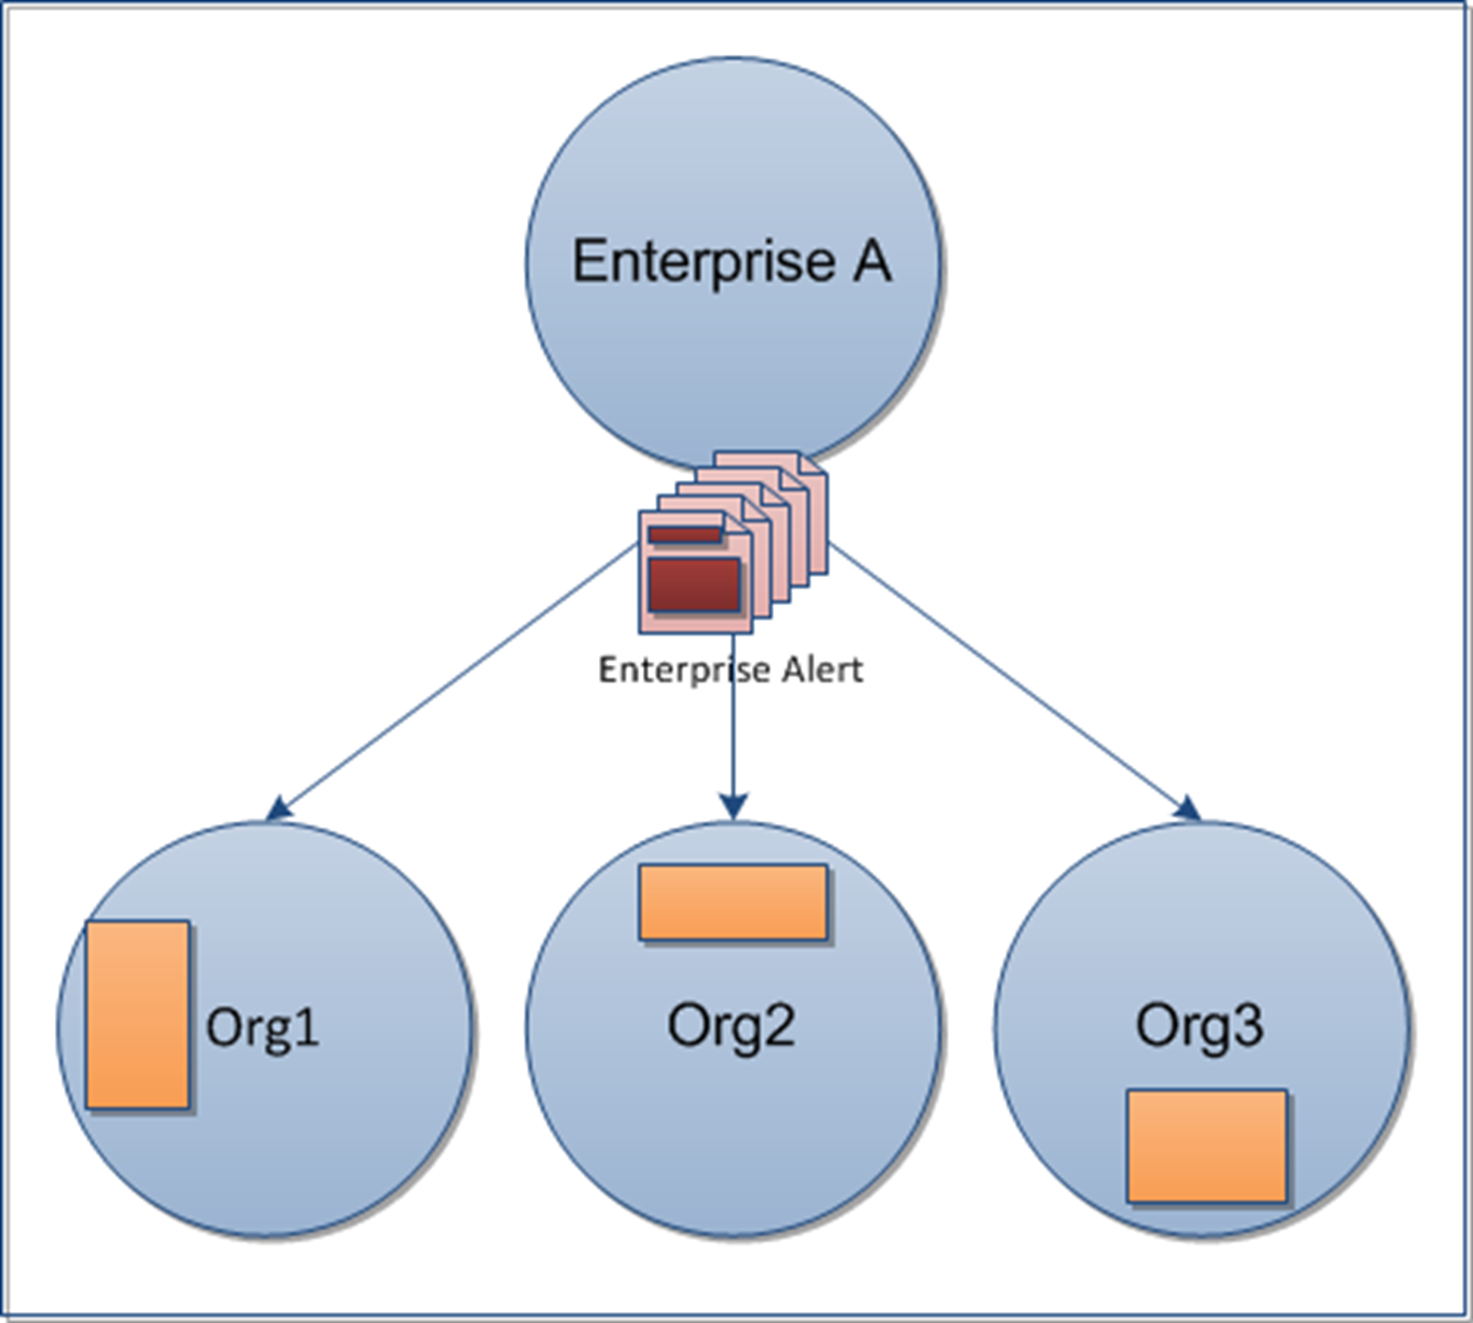 Diagram of an enterprise organization with three sub organizations